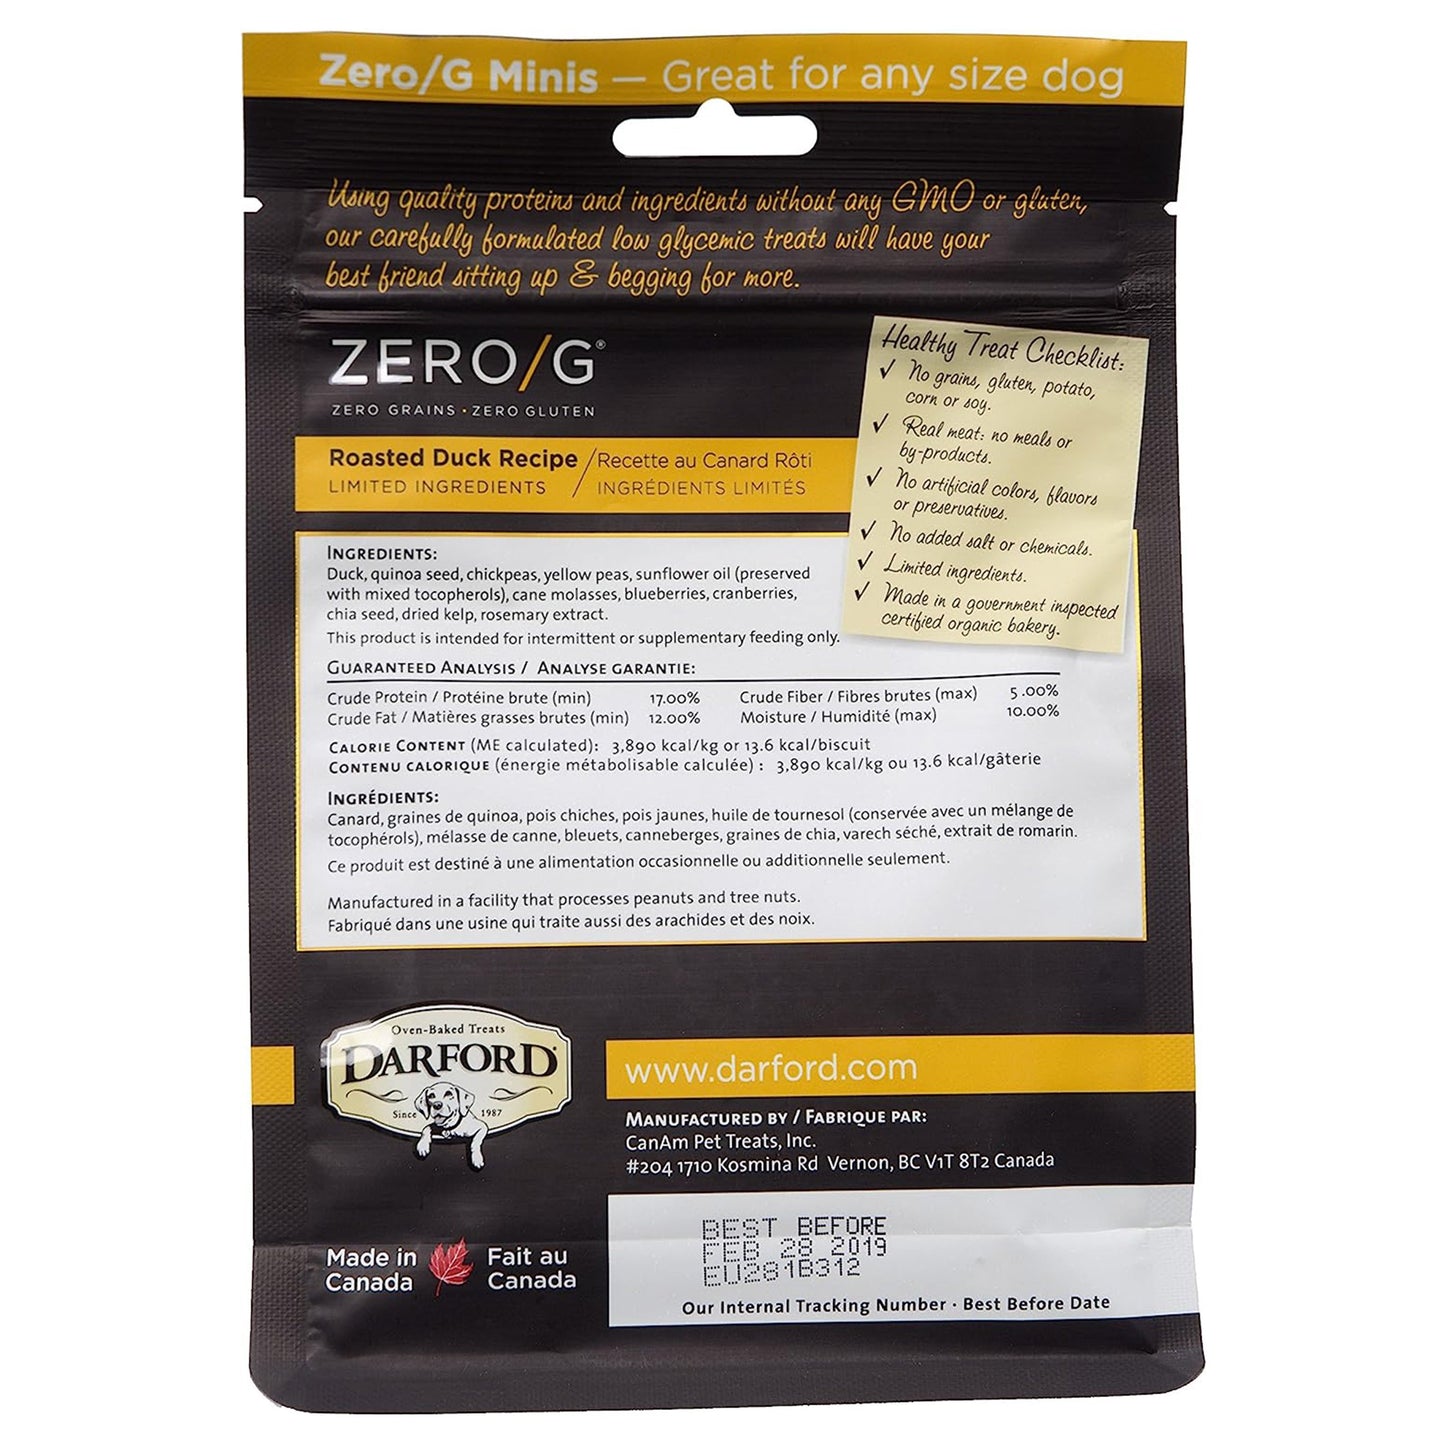 Darford Zero/G Oven Baked All Natural Dog Treats Mini, Roasted Duck Recipe, 6 oz, Darford